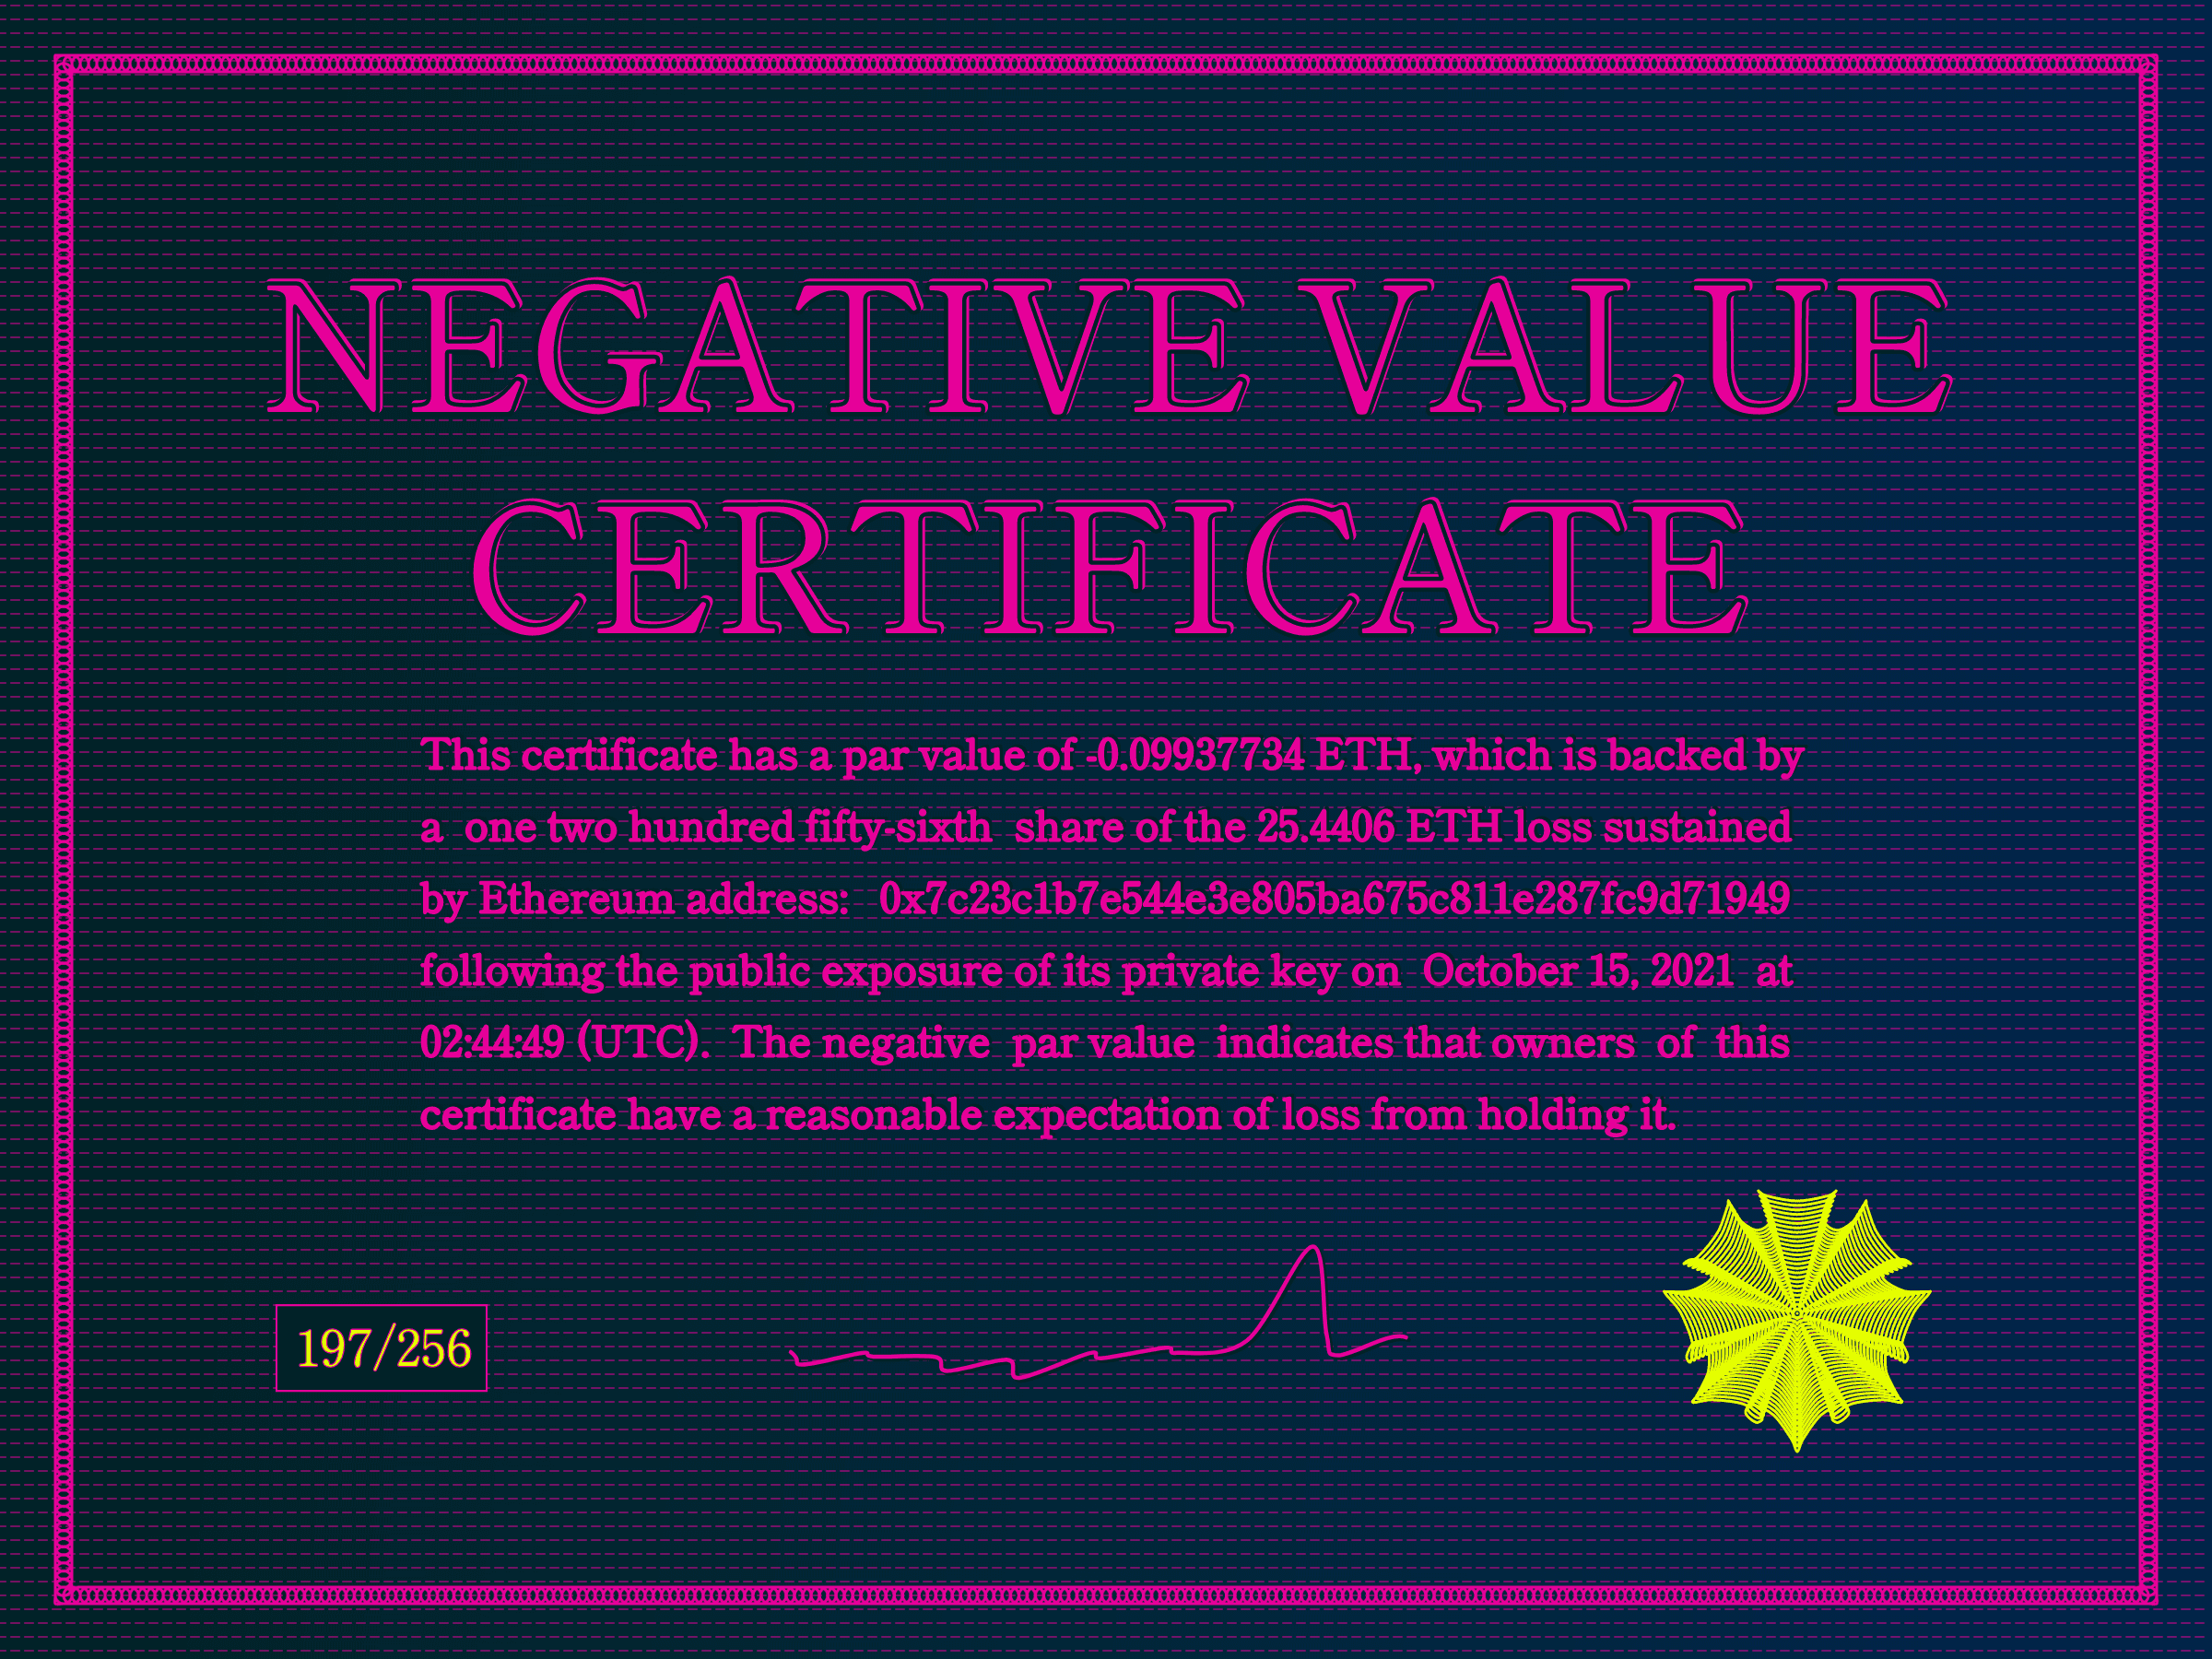 Negative Value Certificate #197 of 256